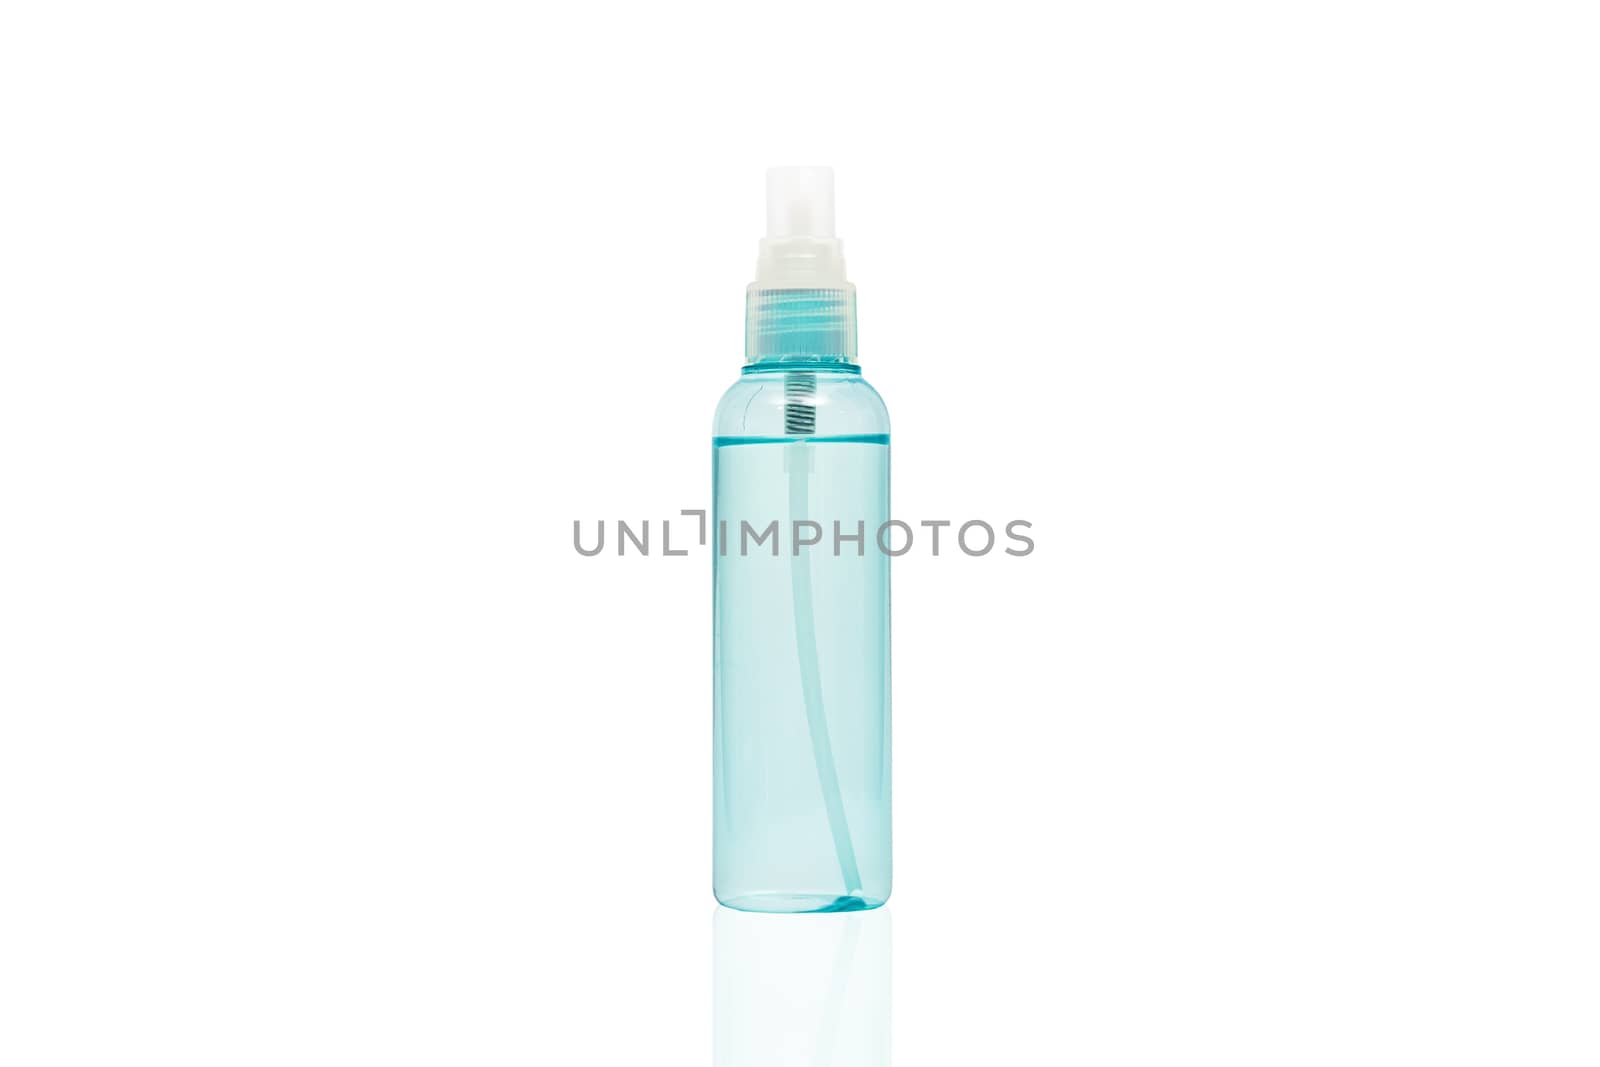 sanitizer alcohol spray in transparent plastic bottle spray inje by asiandelight